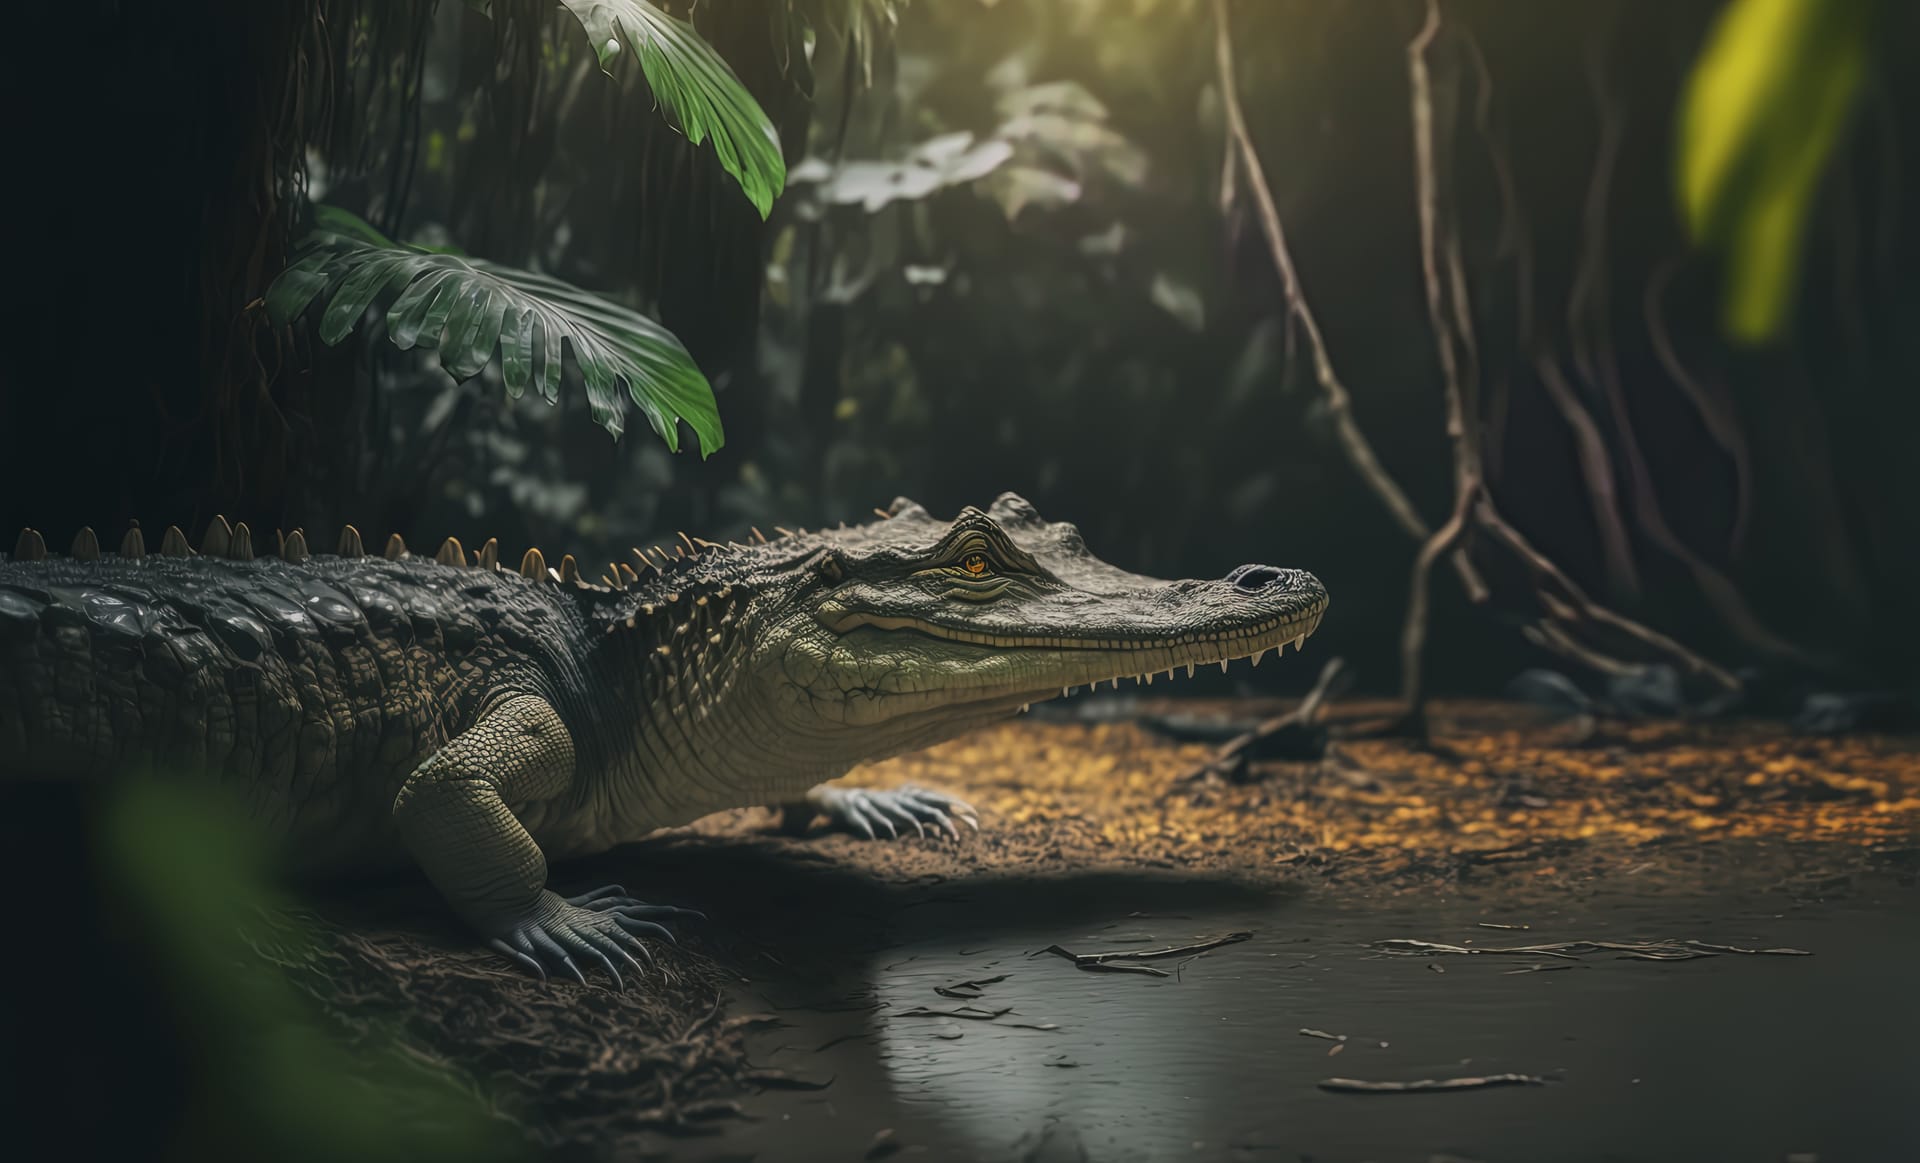 Orinoco alligator photography alligator jungle closeup image